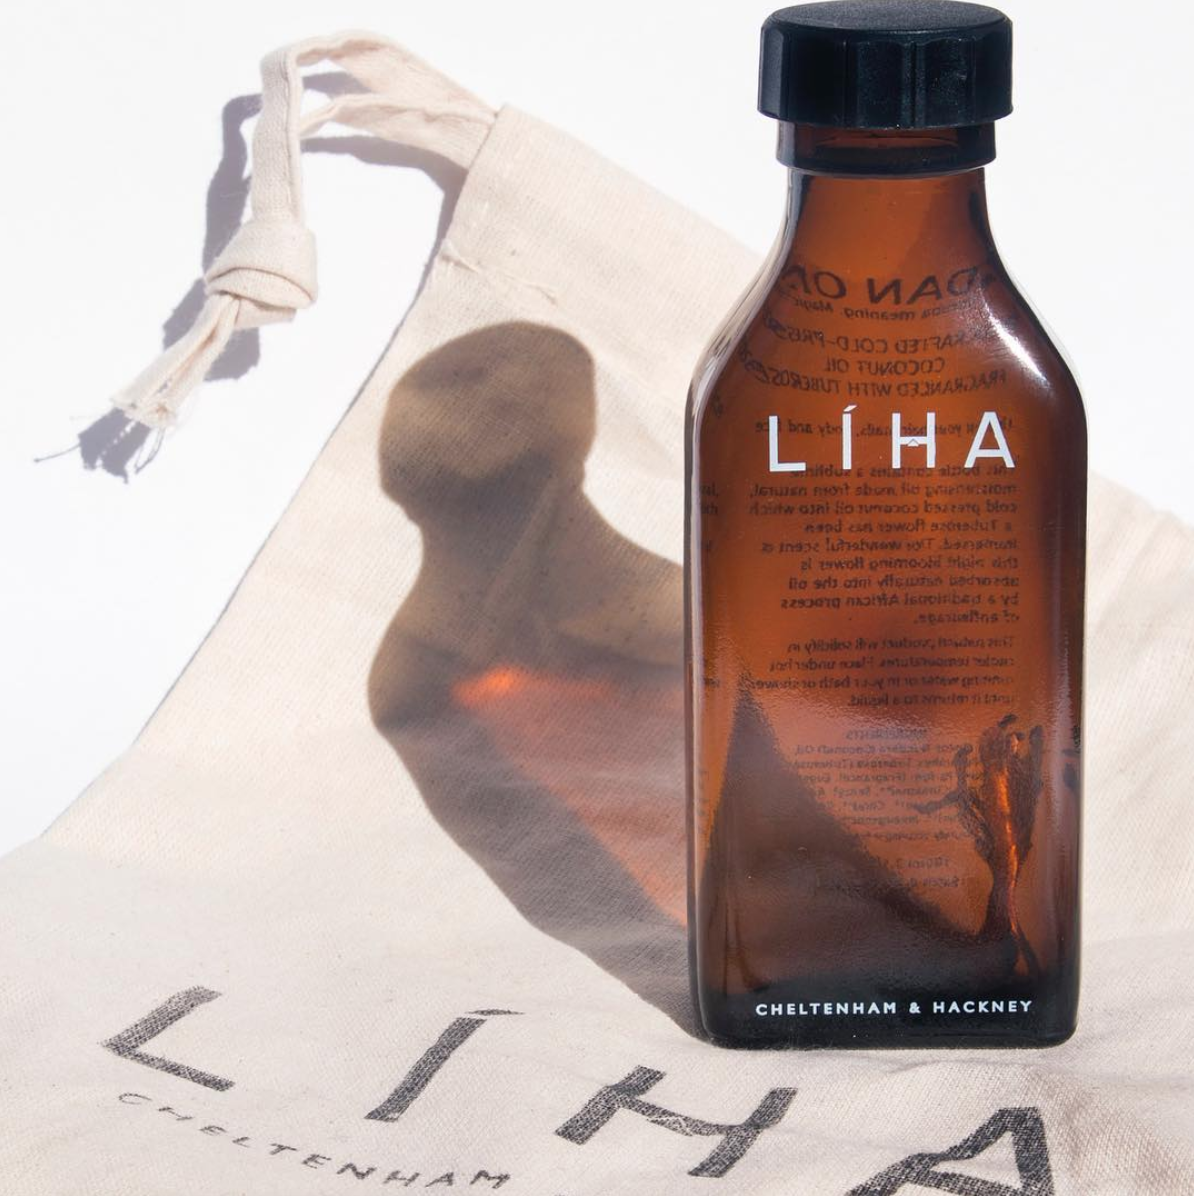 Liha Beauty - Meet the Maker / 91 Magazine